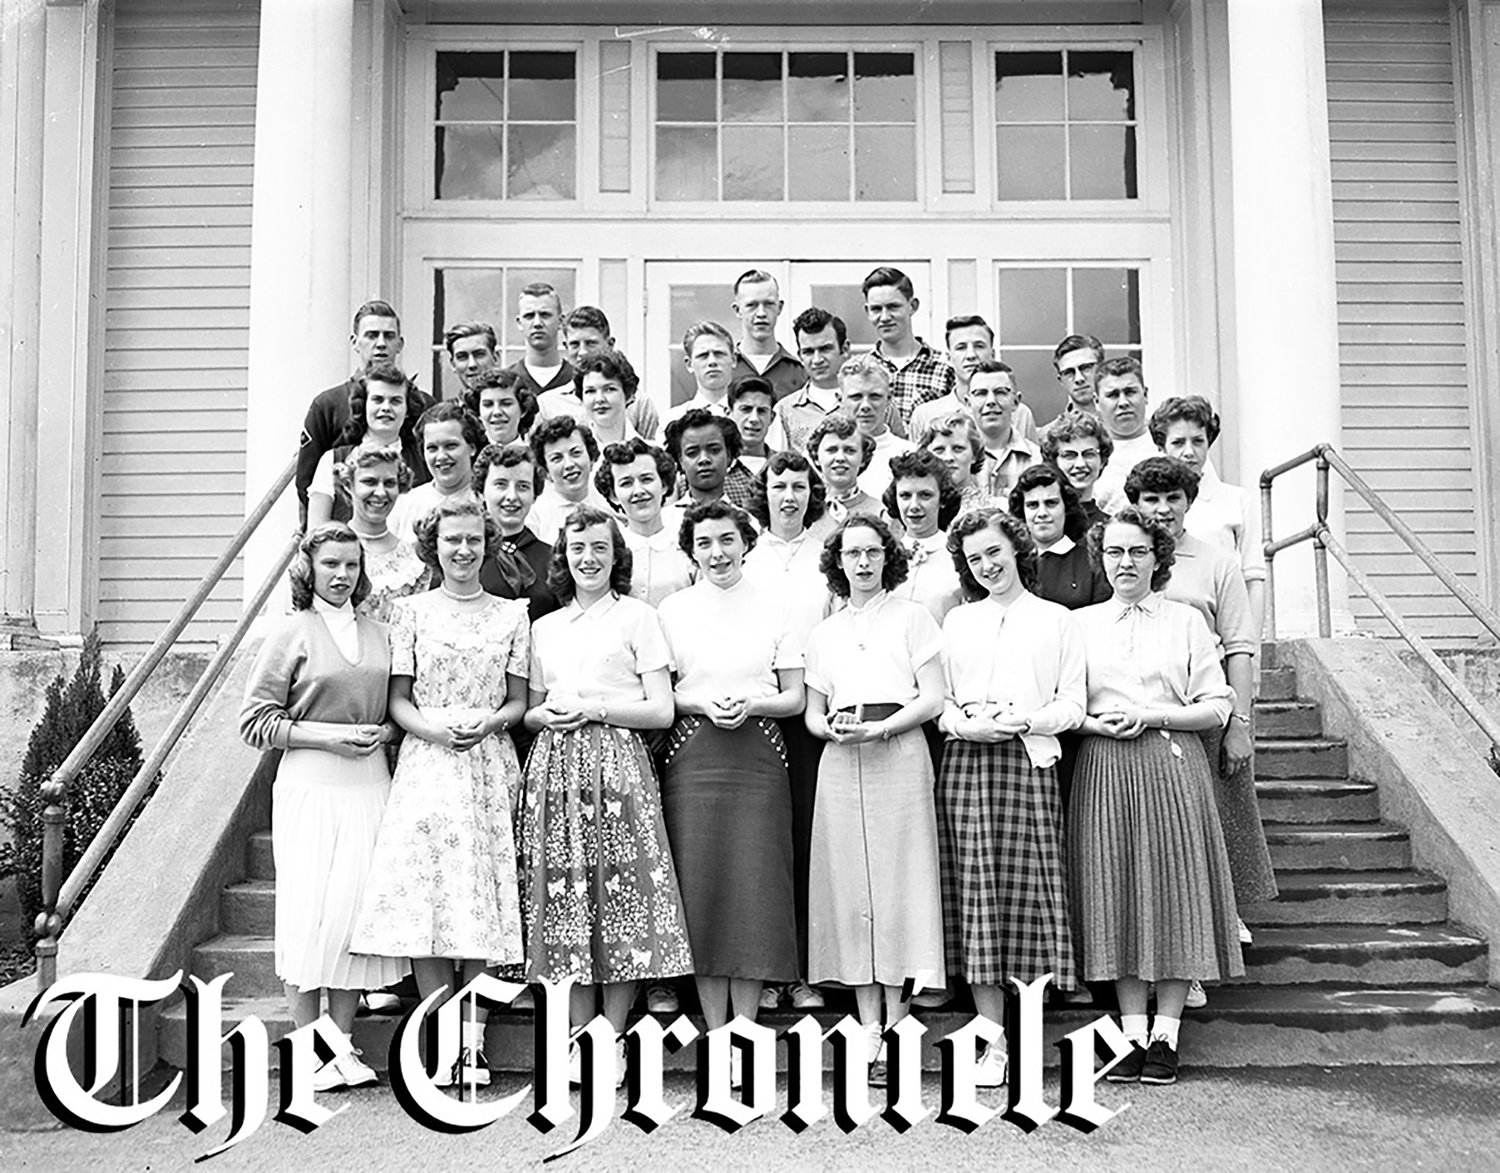 The Winlock graduating high school class of 1954.